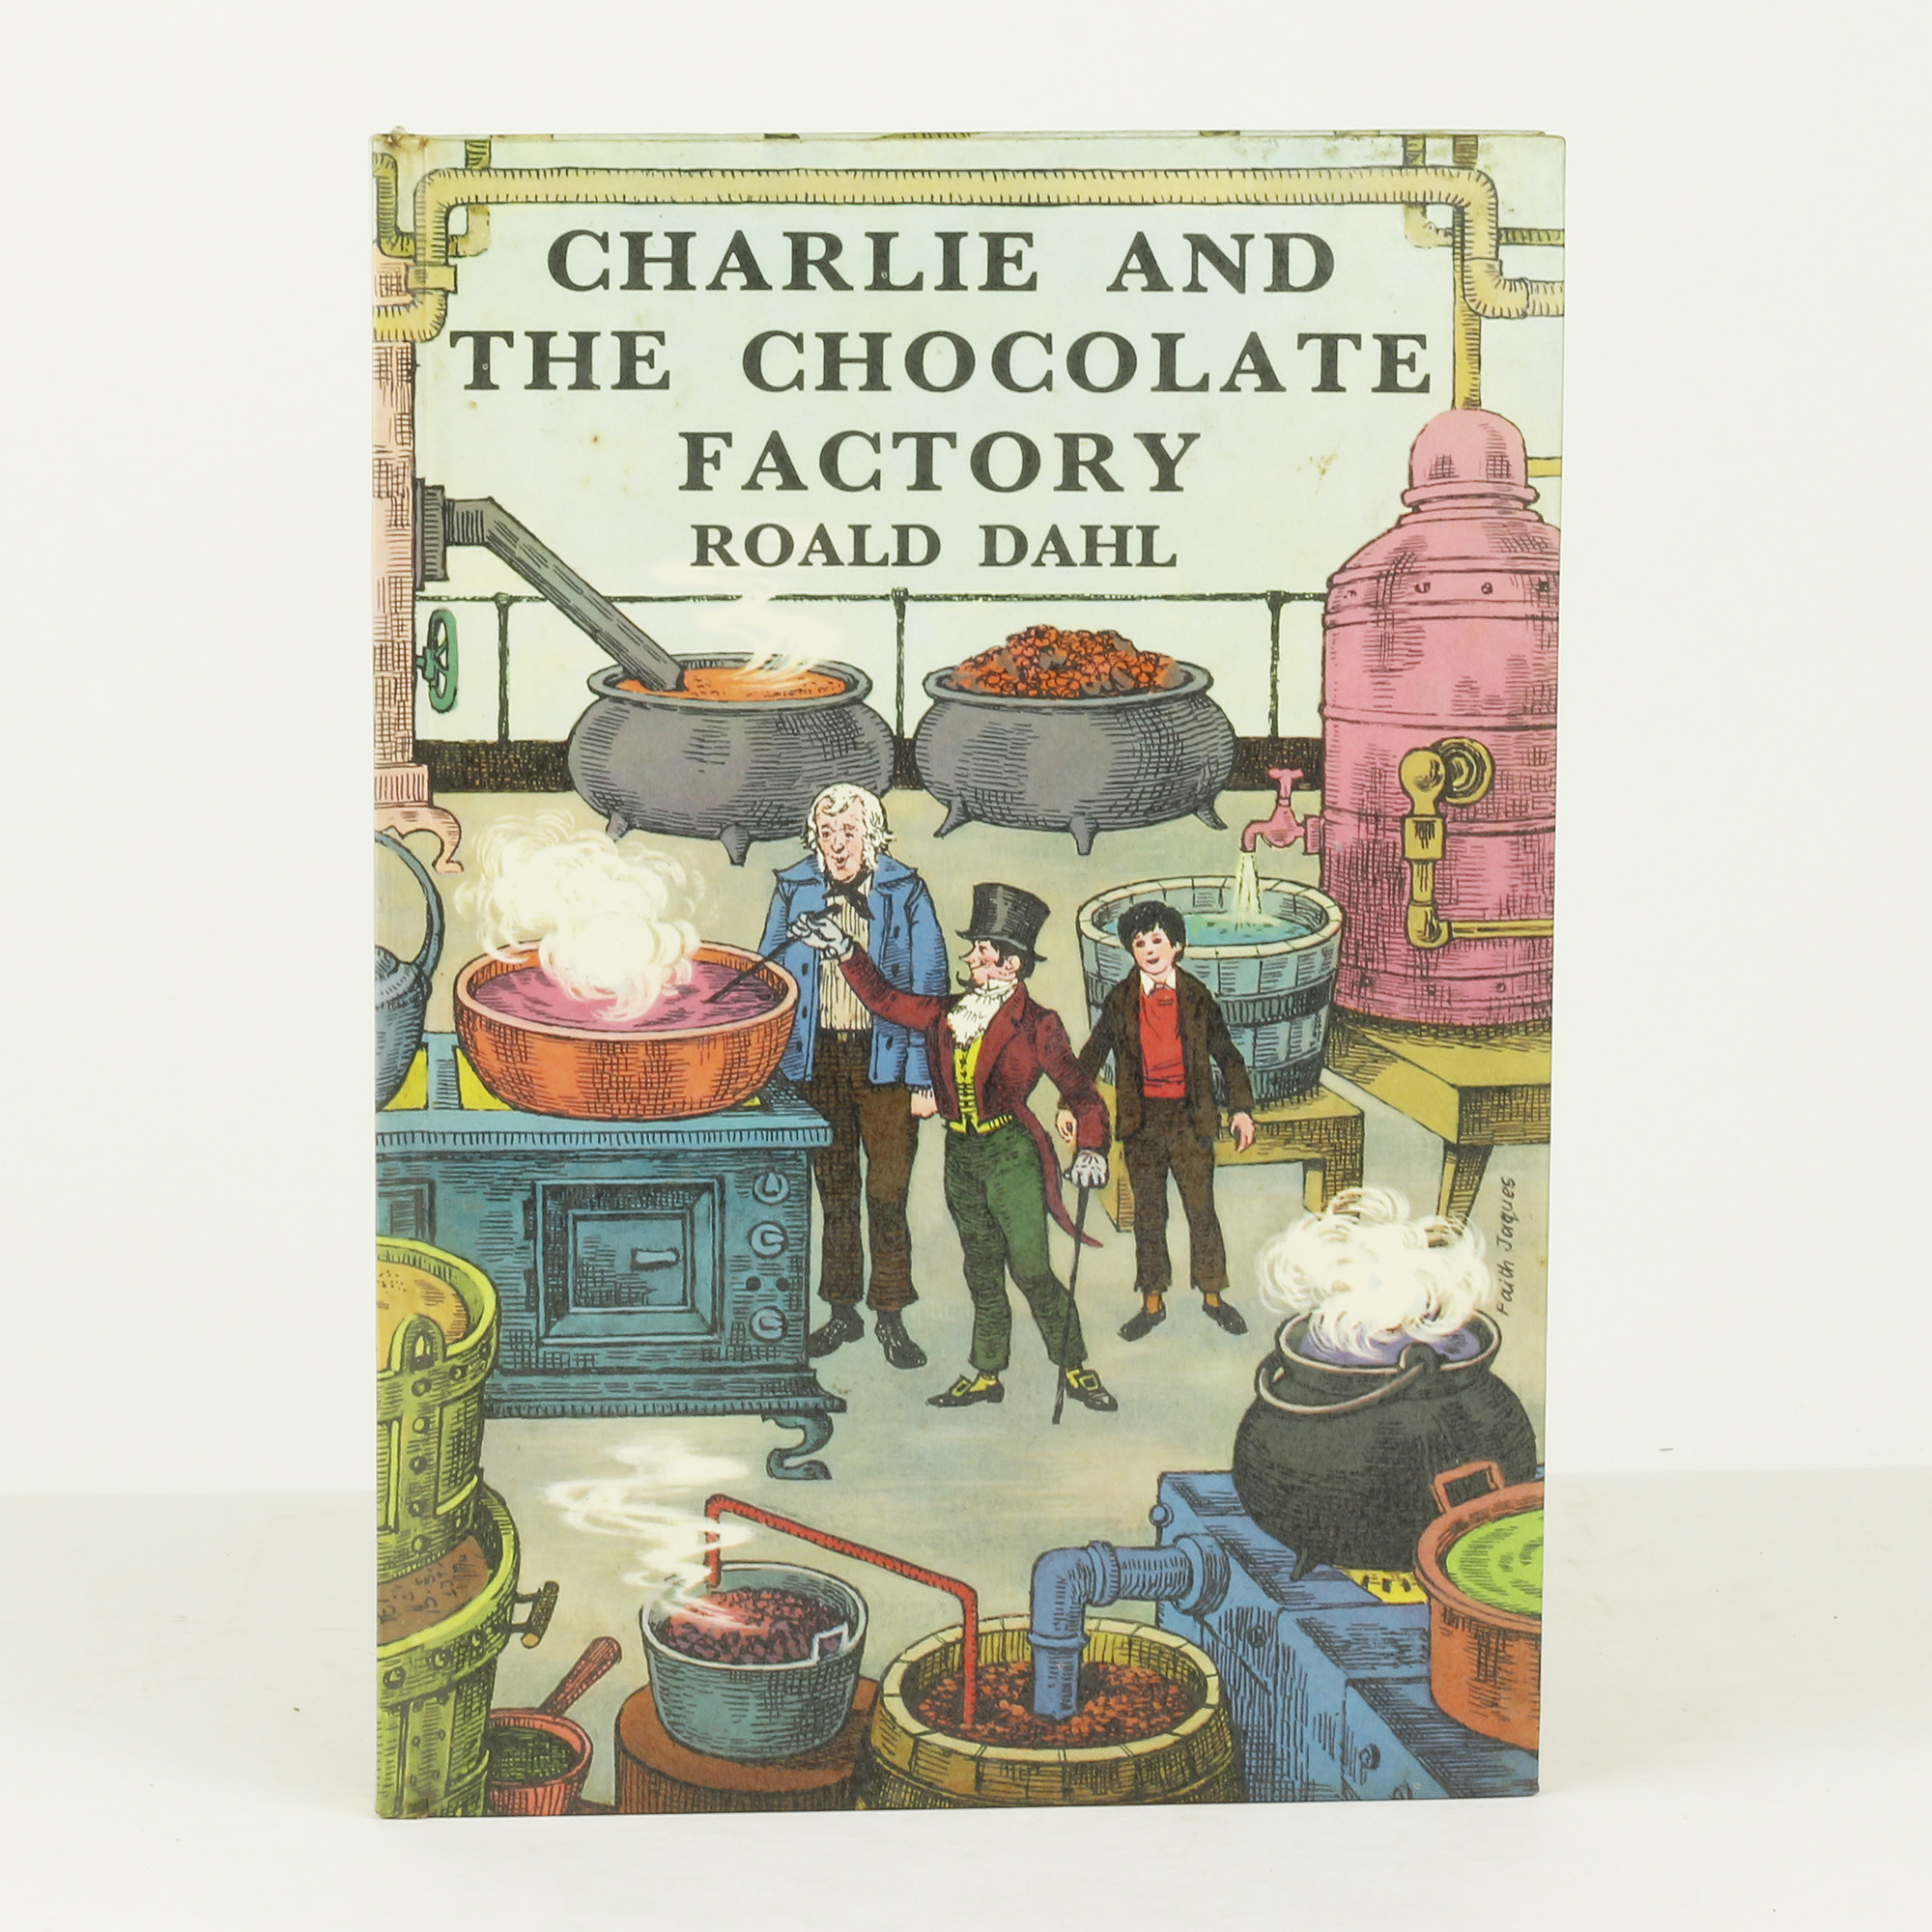 Шоколадная фабрика автор. Charlie and the Chocolate Factory book. Роальд даль Чарли и шоколадная фабрика иллюстрации. Роальд даль Чарли и шоколадная. Charlie and the Chocolate Factory книга.